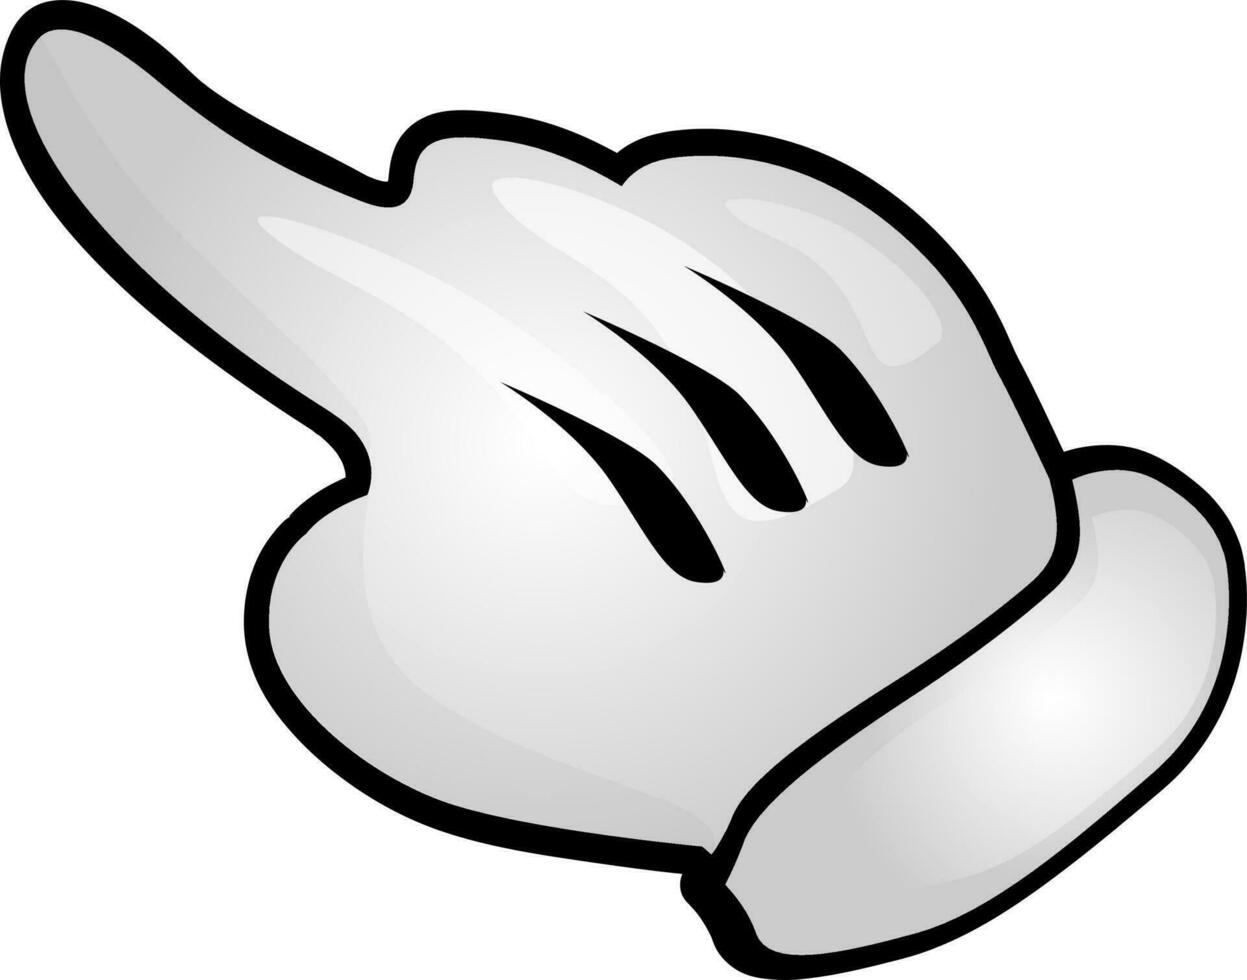 Pointer finger. Thin wrist icon. Cursor symbol. Hand vector illustration.